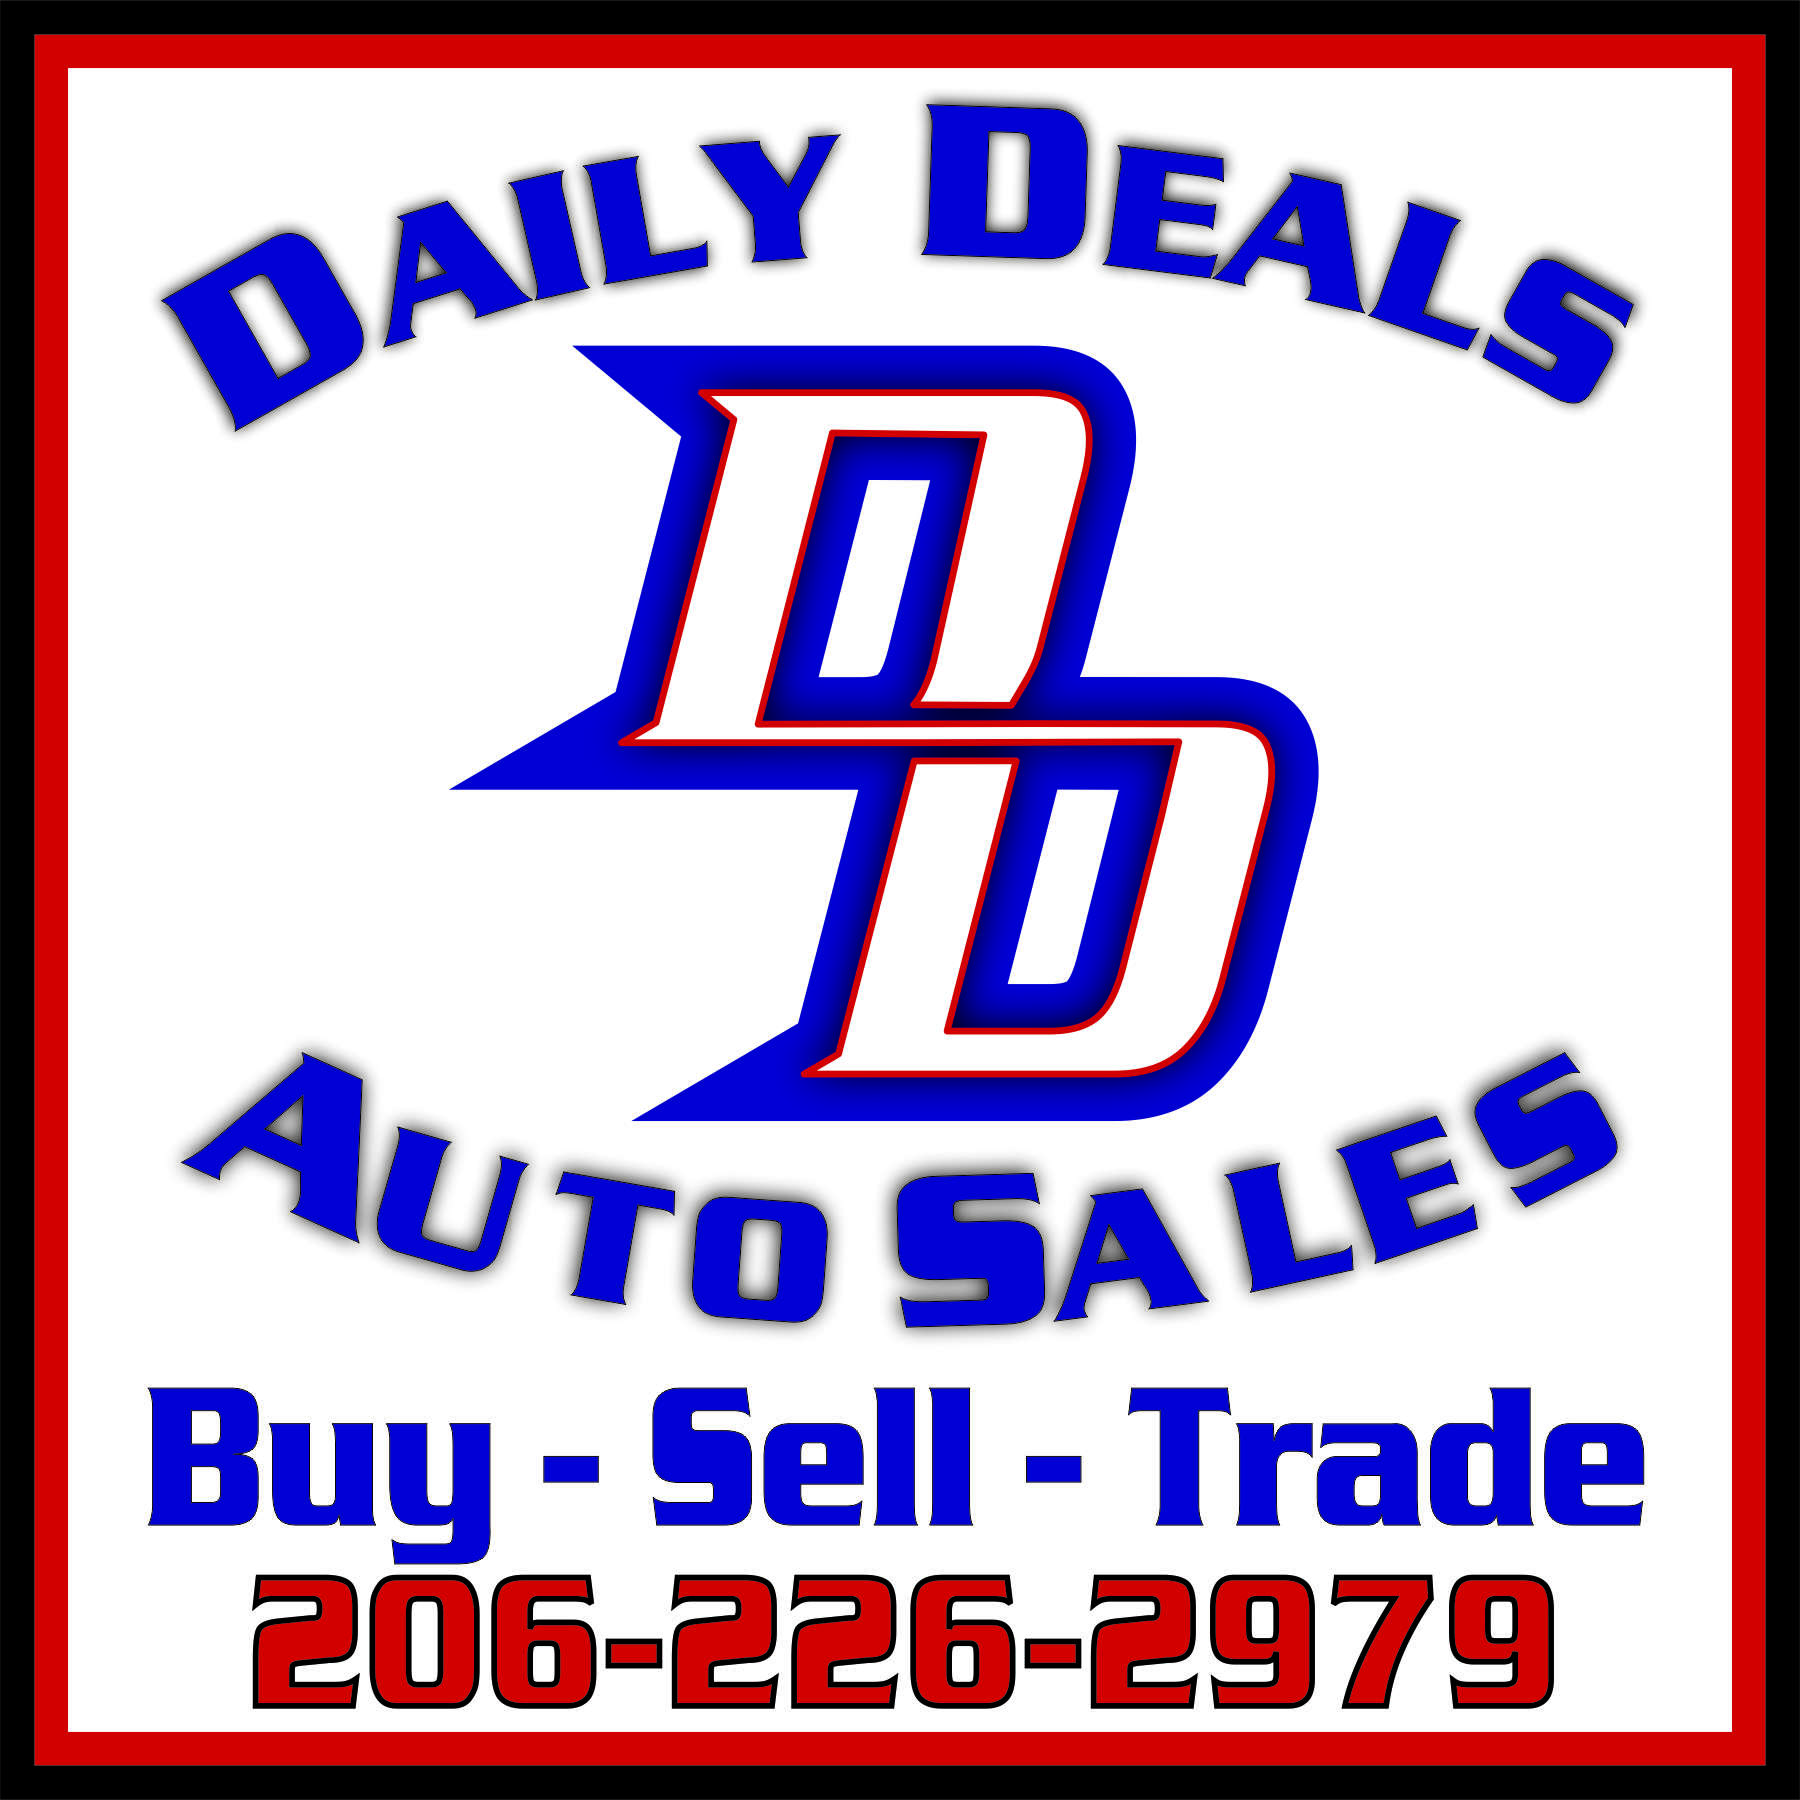 dealer daily 365